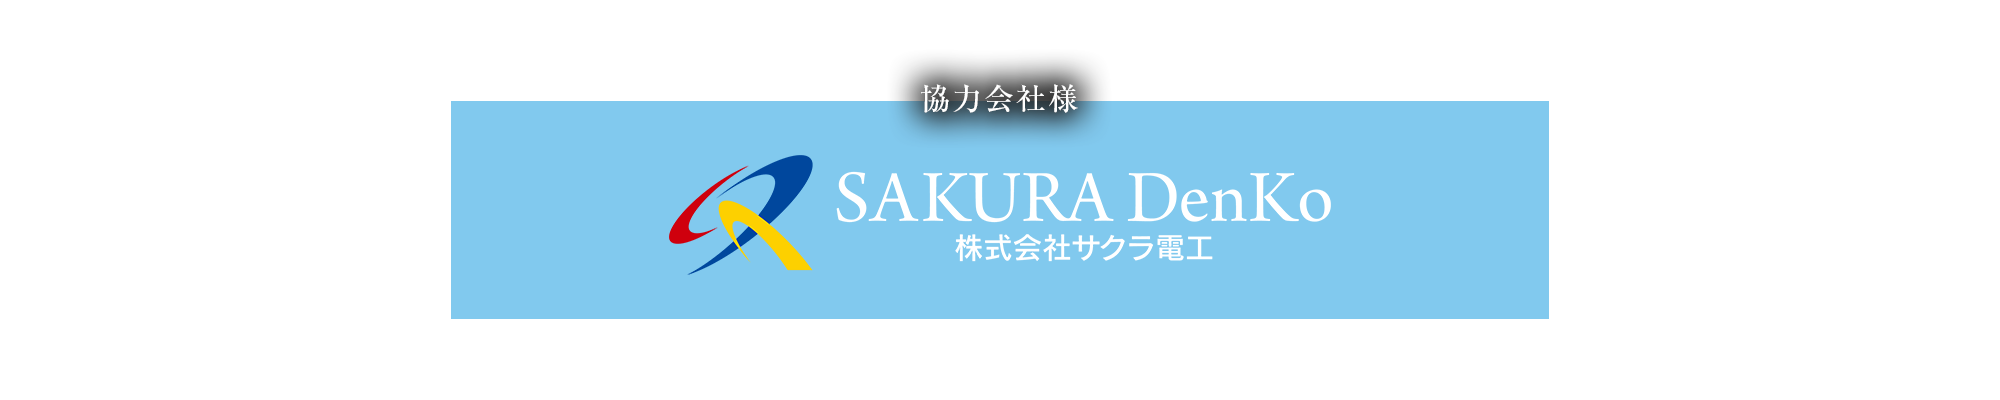 sakura_banner